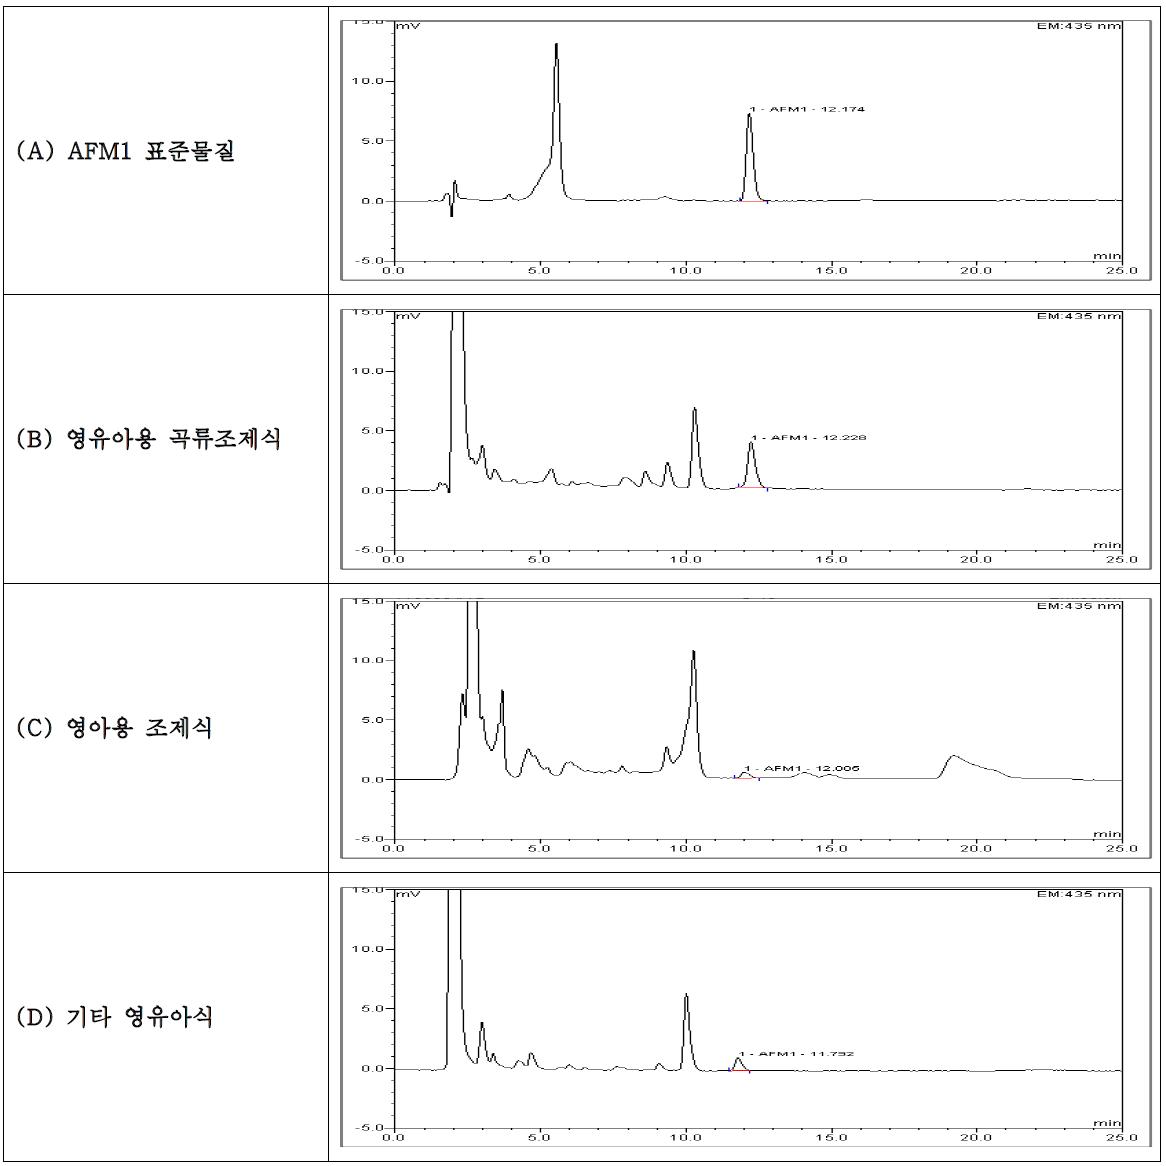 Chromatogram of standard and positive sample for aflatoxin M1.